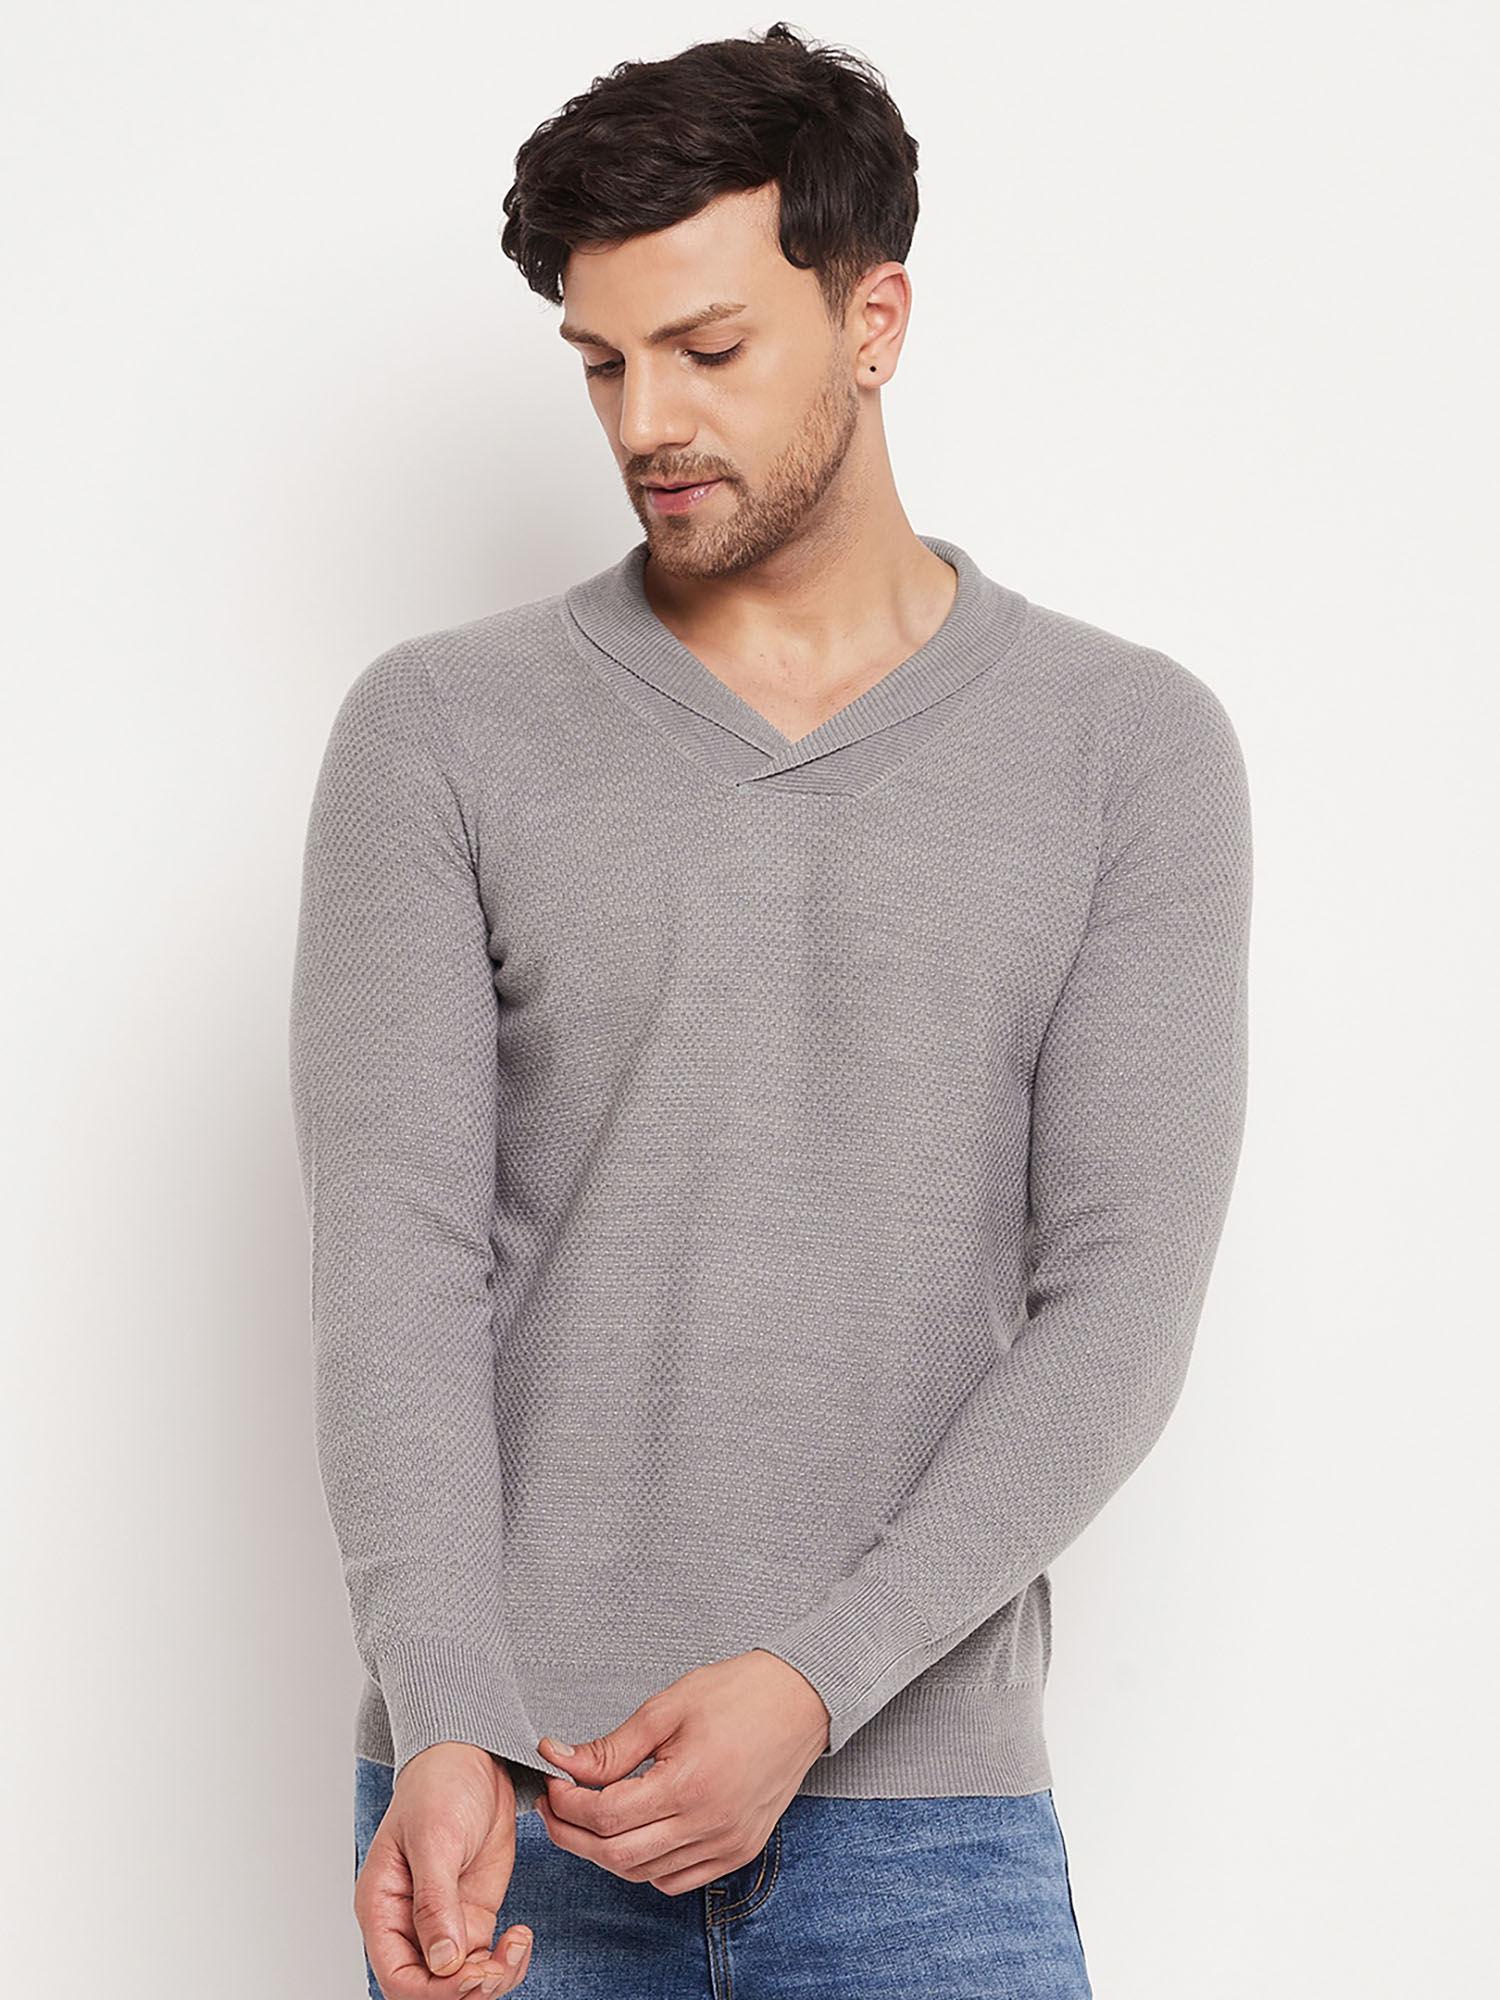 grey sweater for men